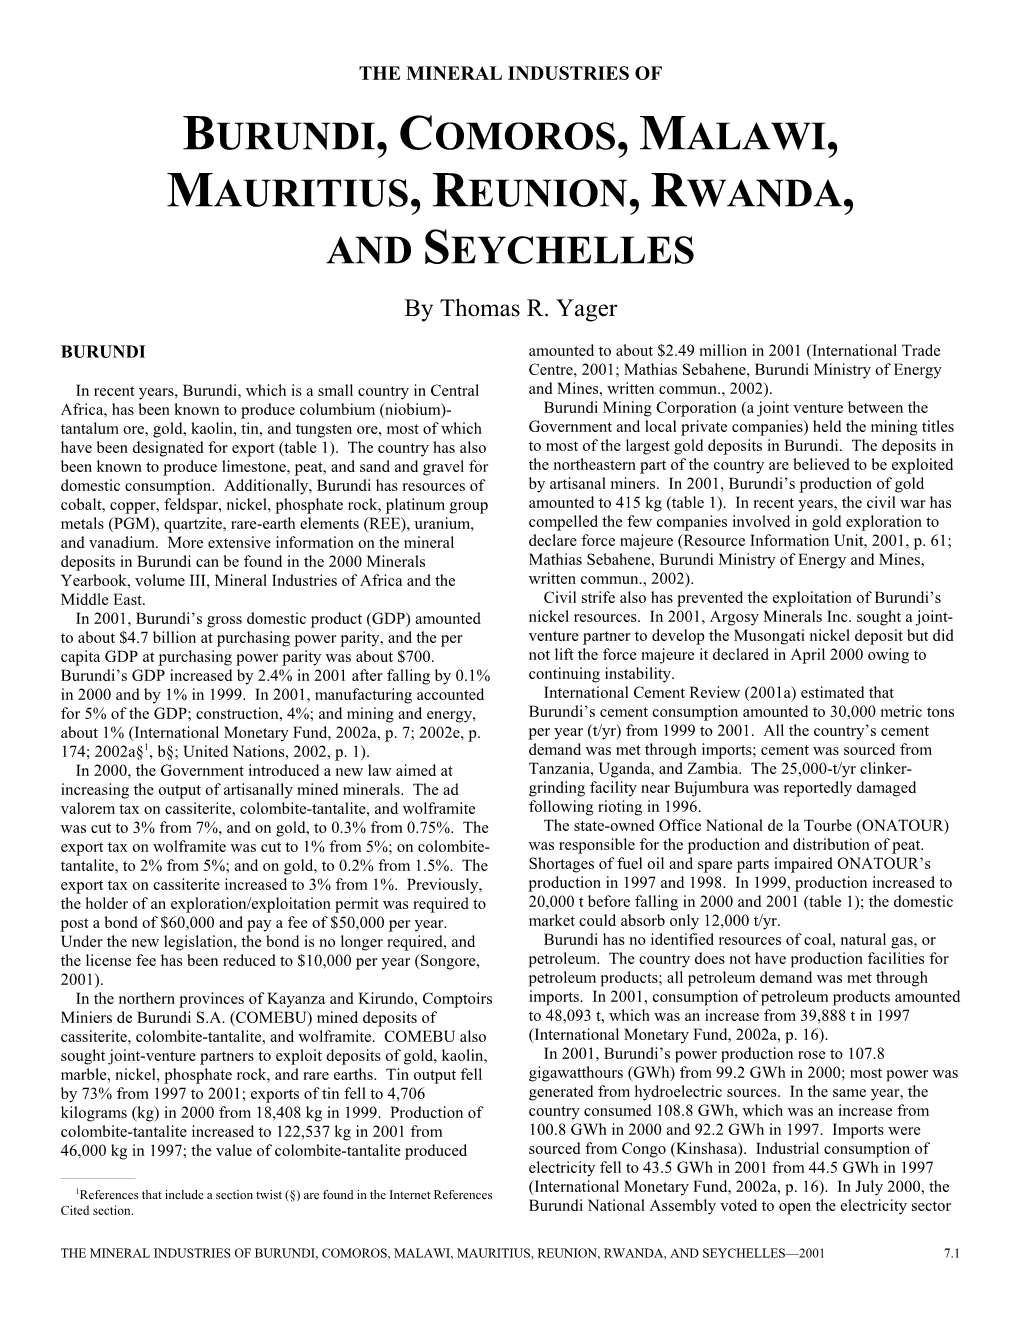 BURUNDI, COMOROS, MALAWI, MAURITIUS, REUNION, RWANDA, and SEYCHELLES by Thomas R